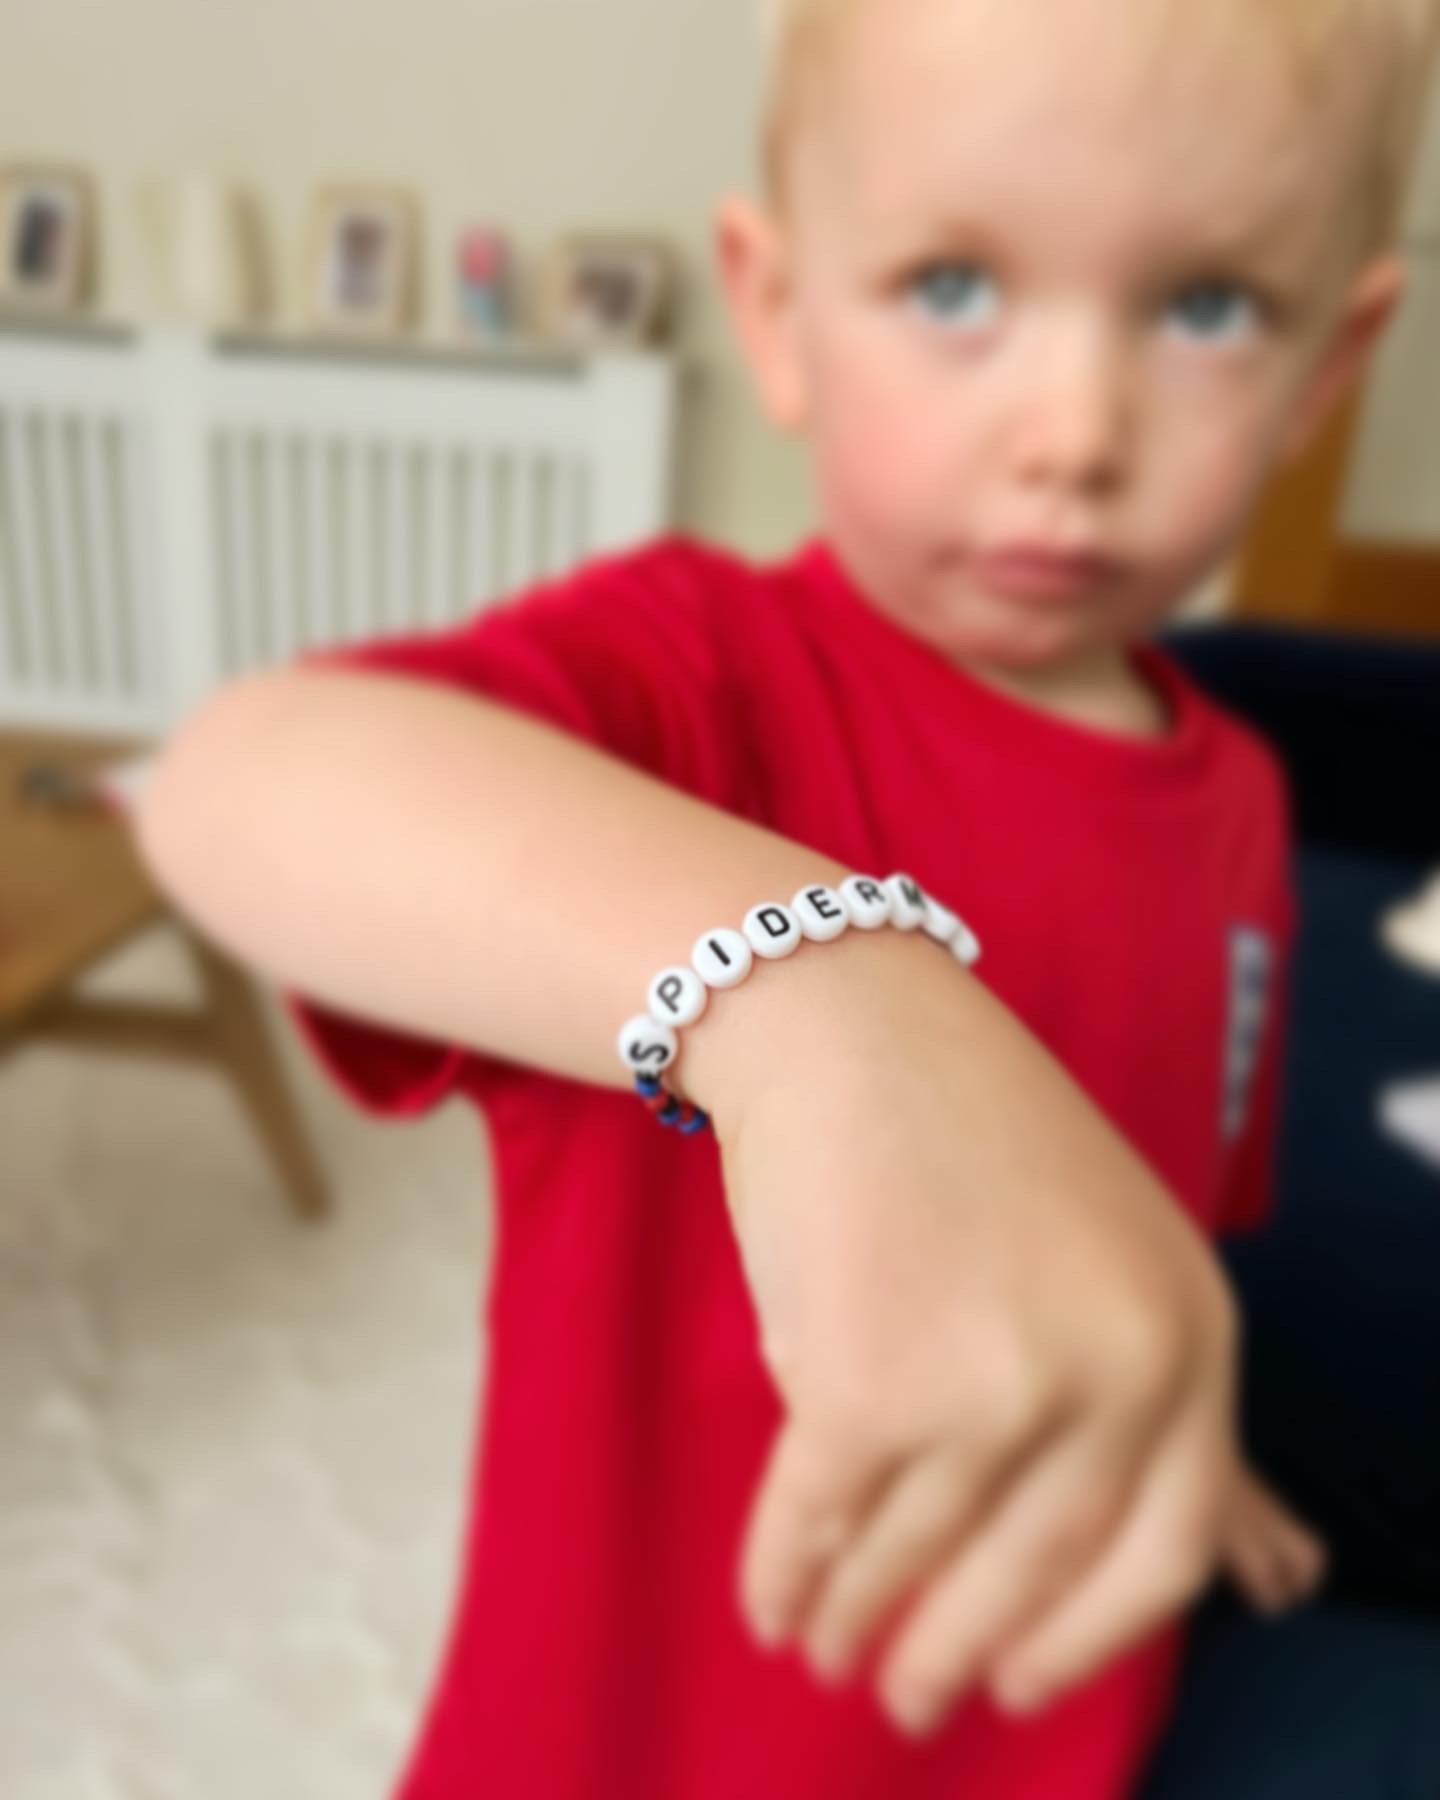 Children's Personalised Bead Bracelet